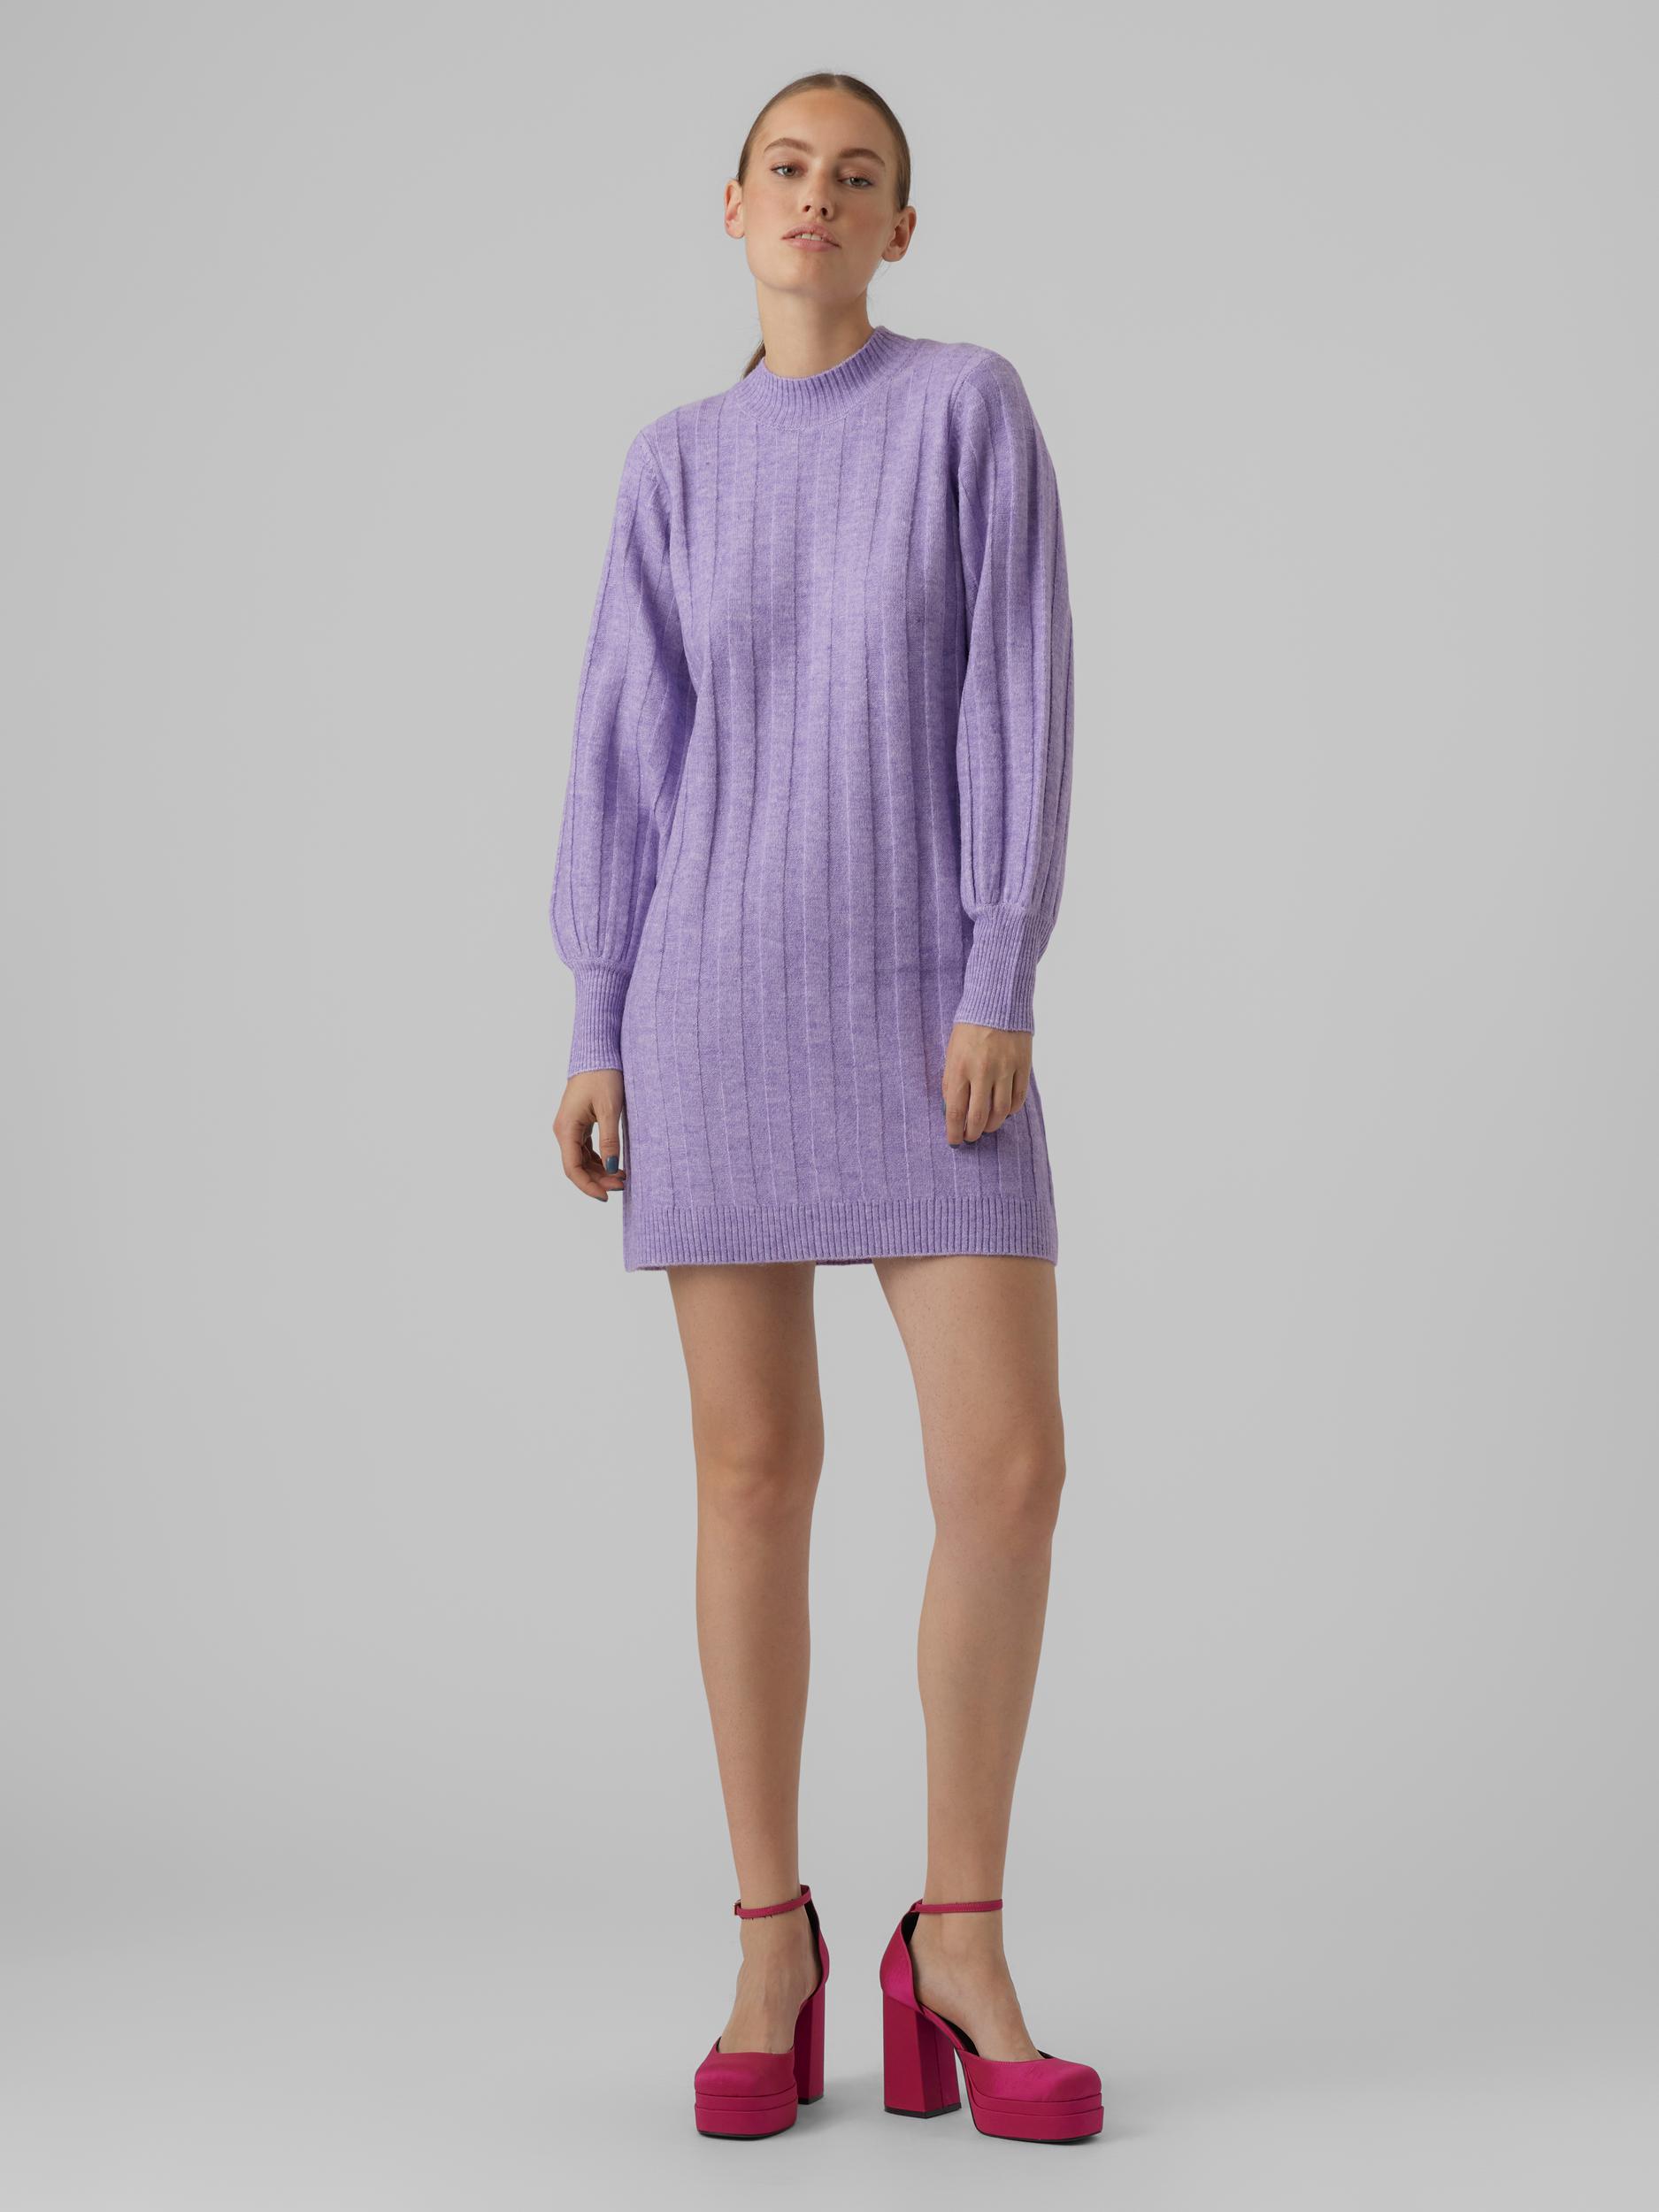 Alanis short knitted dress, VIOLA, large